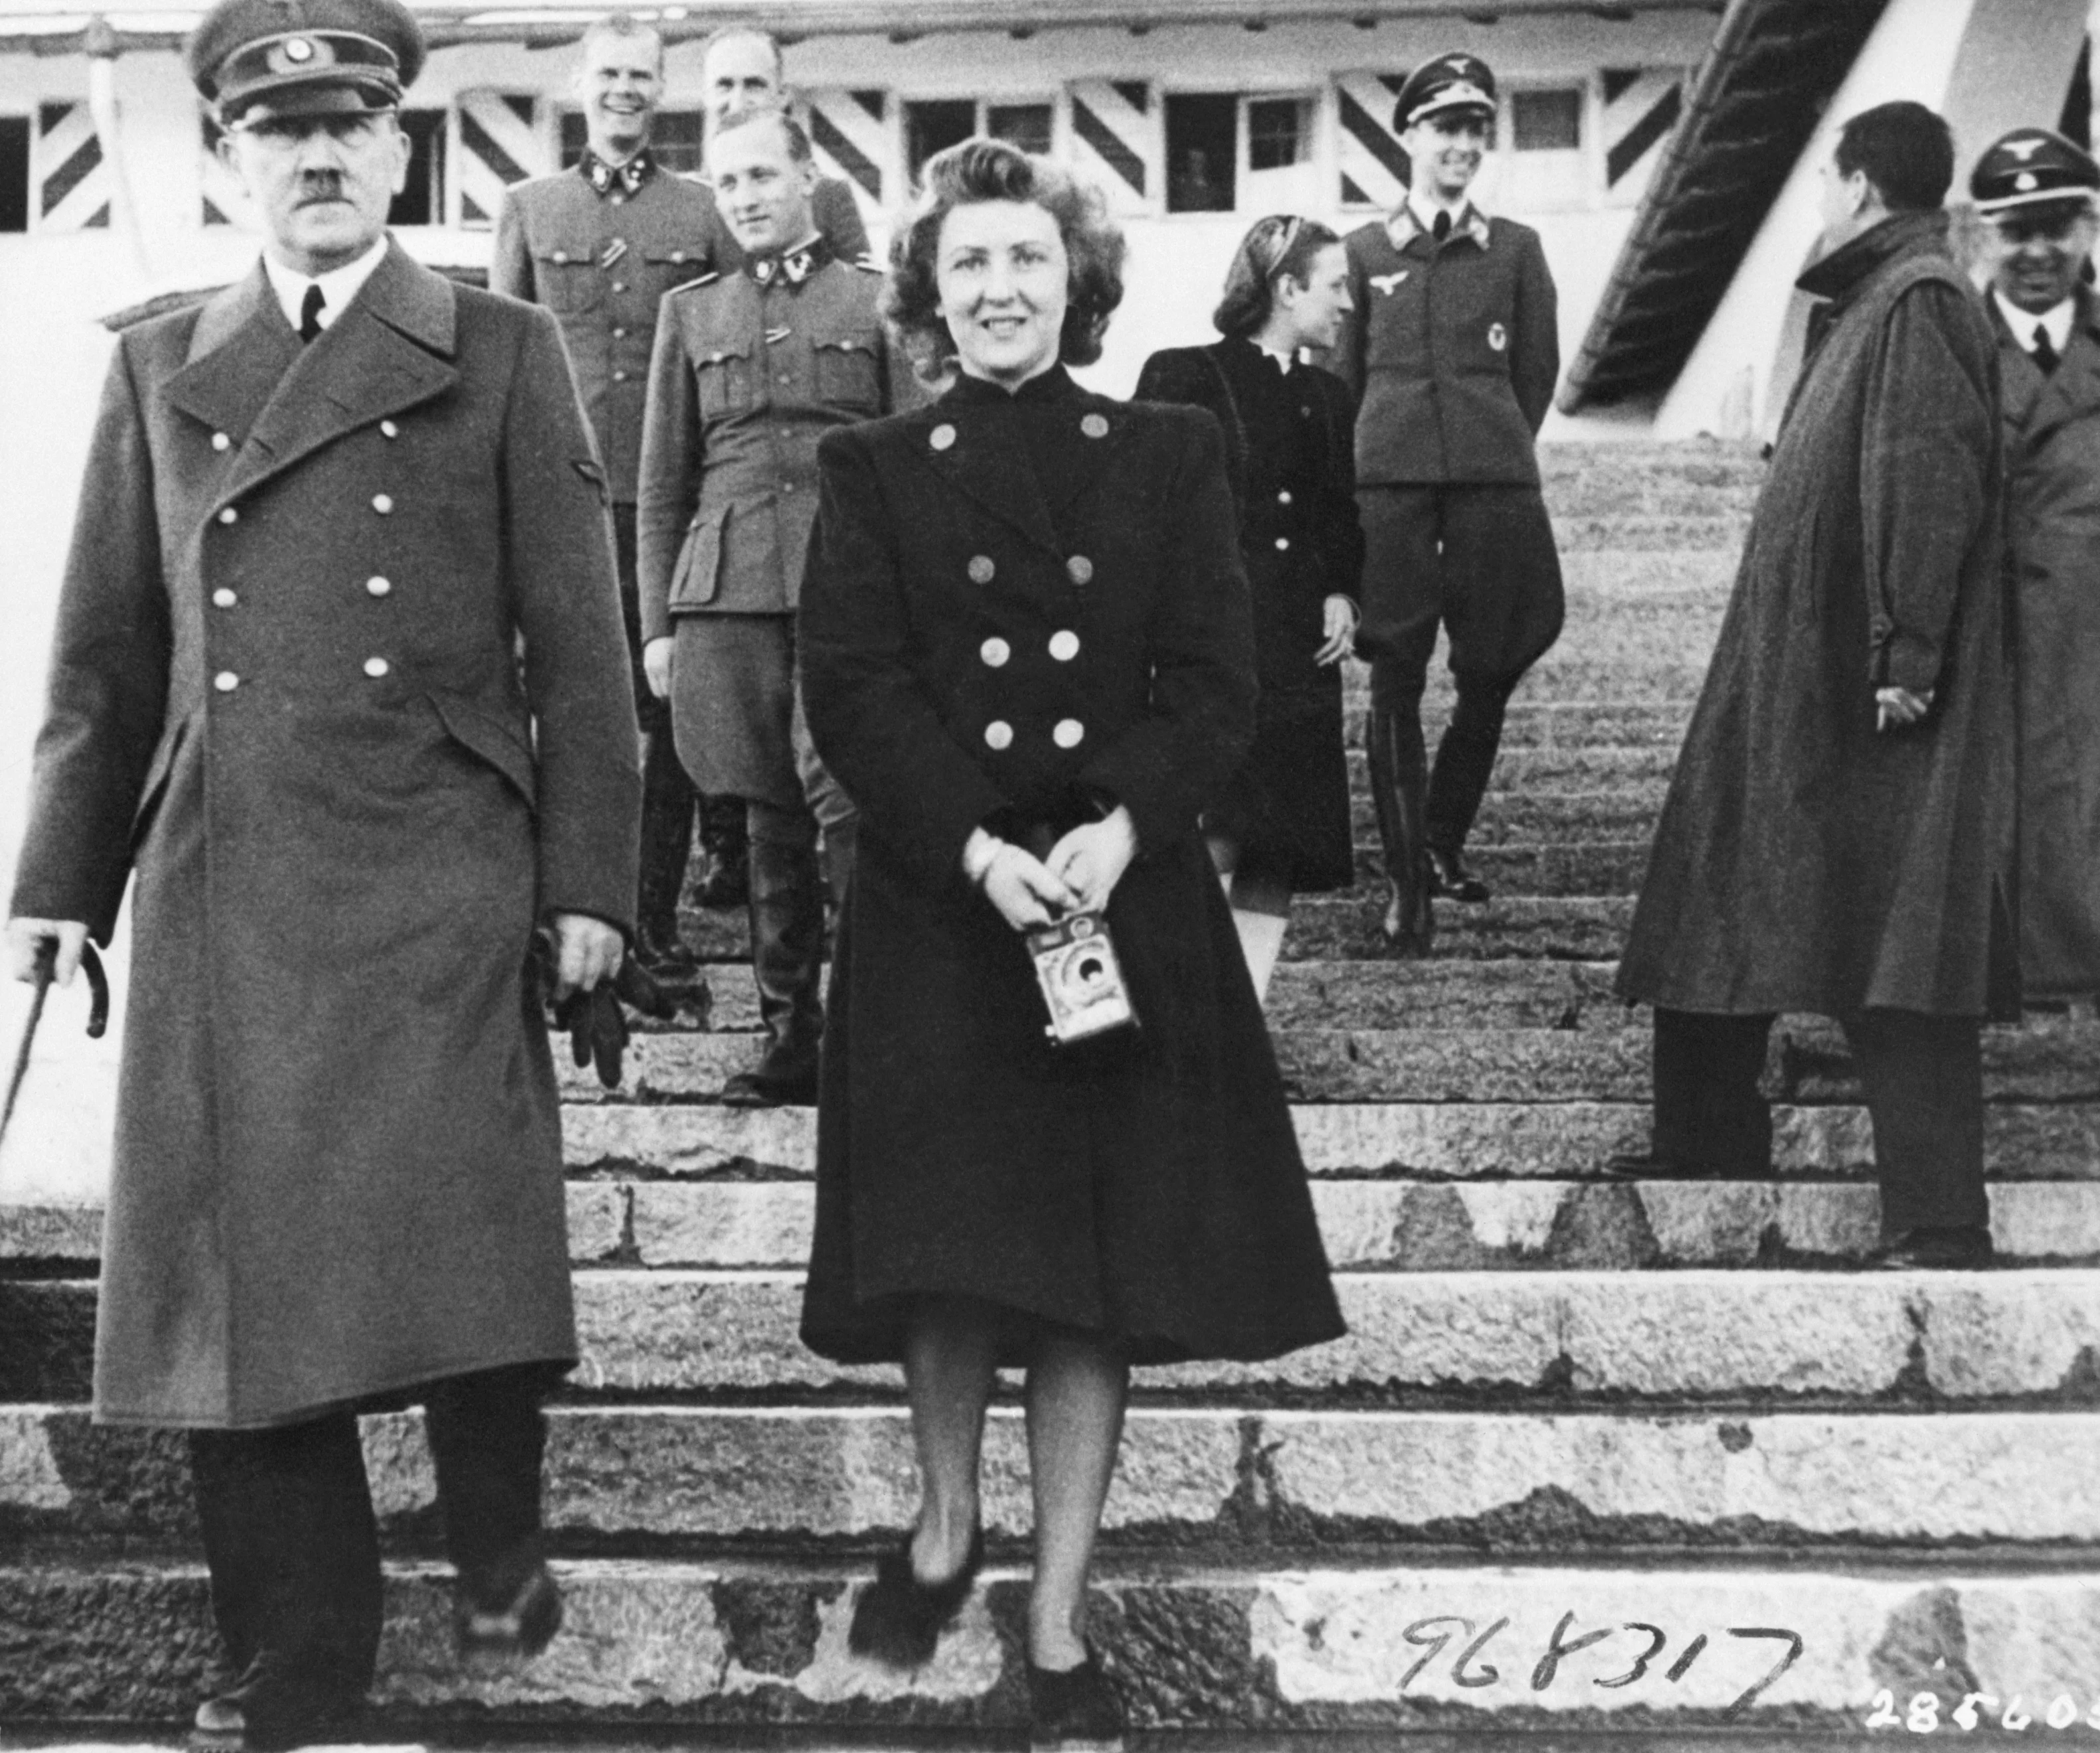 Гитлер и Ева Браун